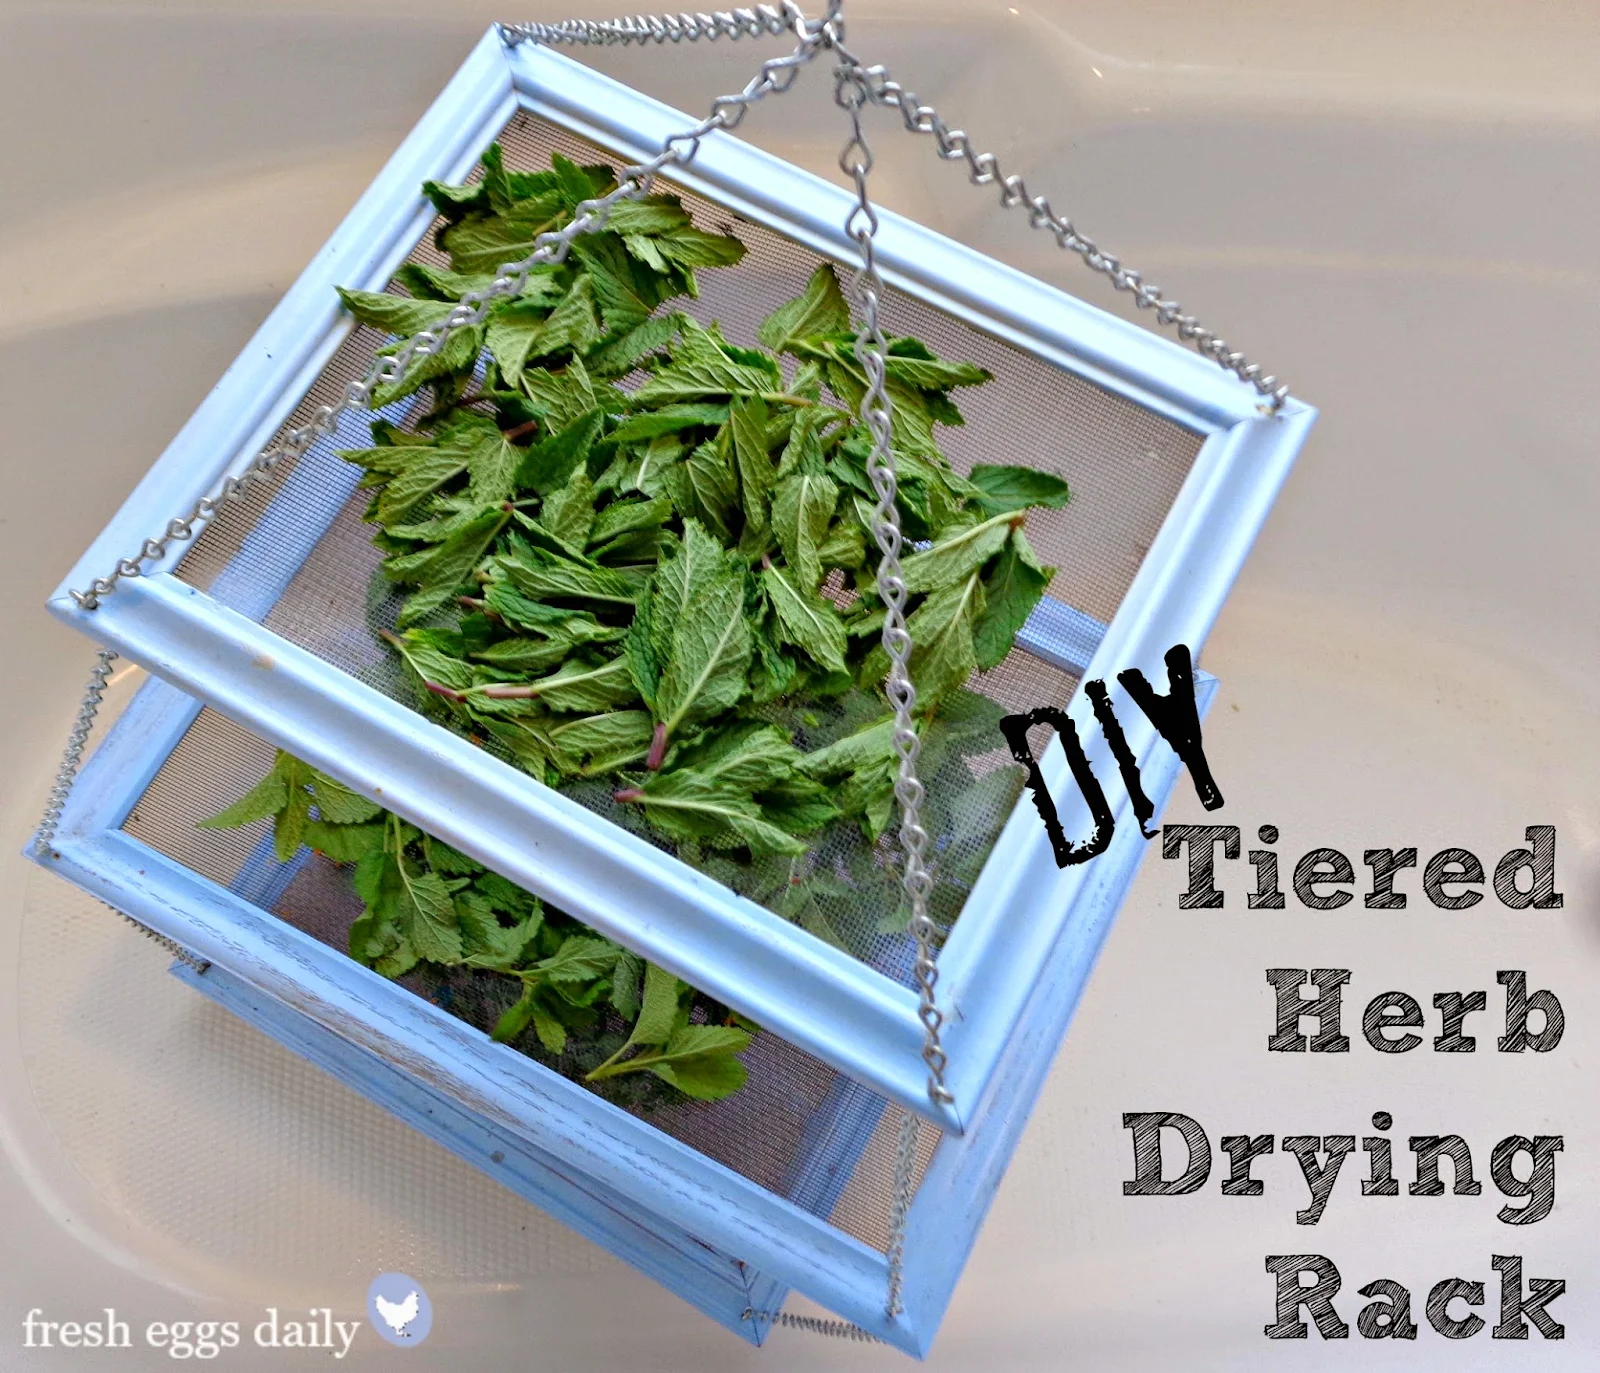 Beautiful DIY Herb Drying Rack For Drying Herbs